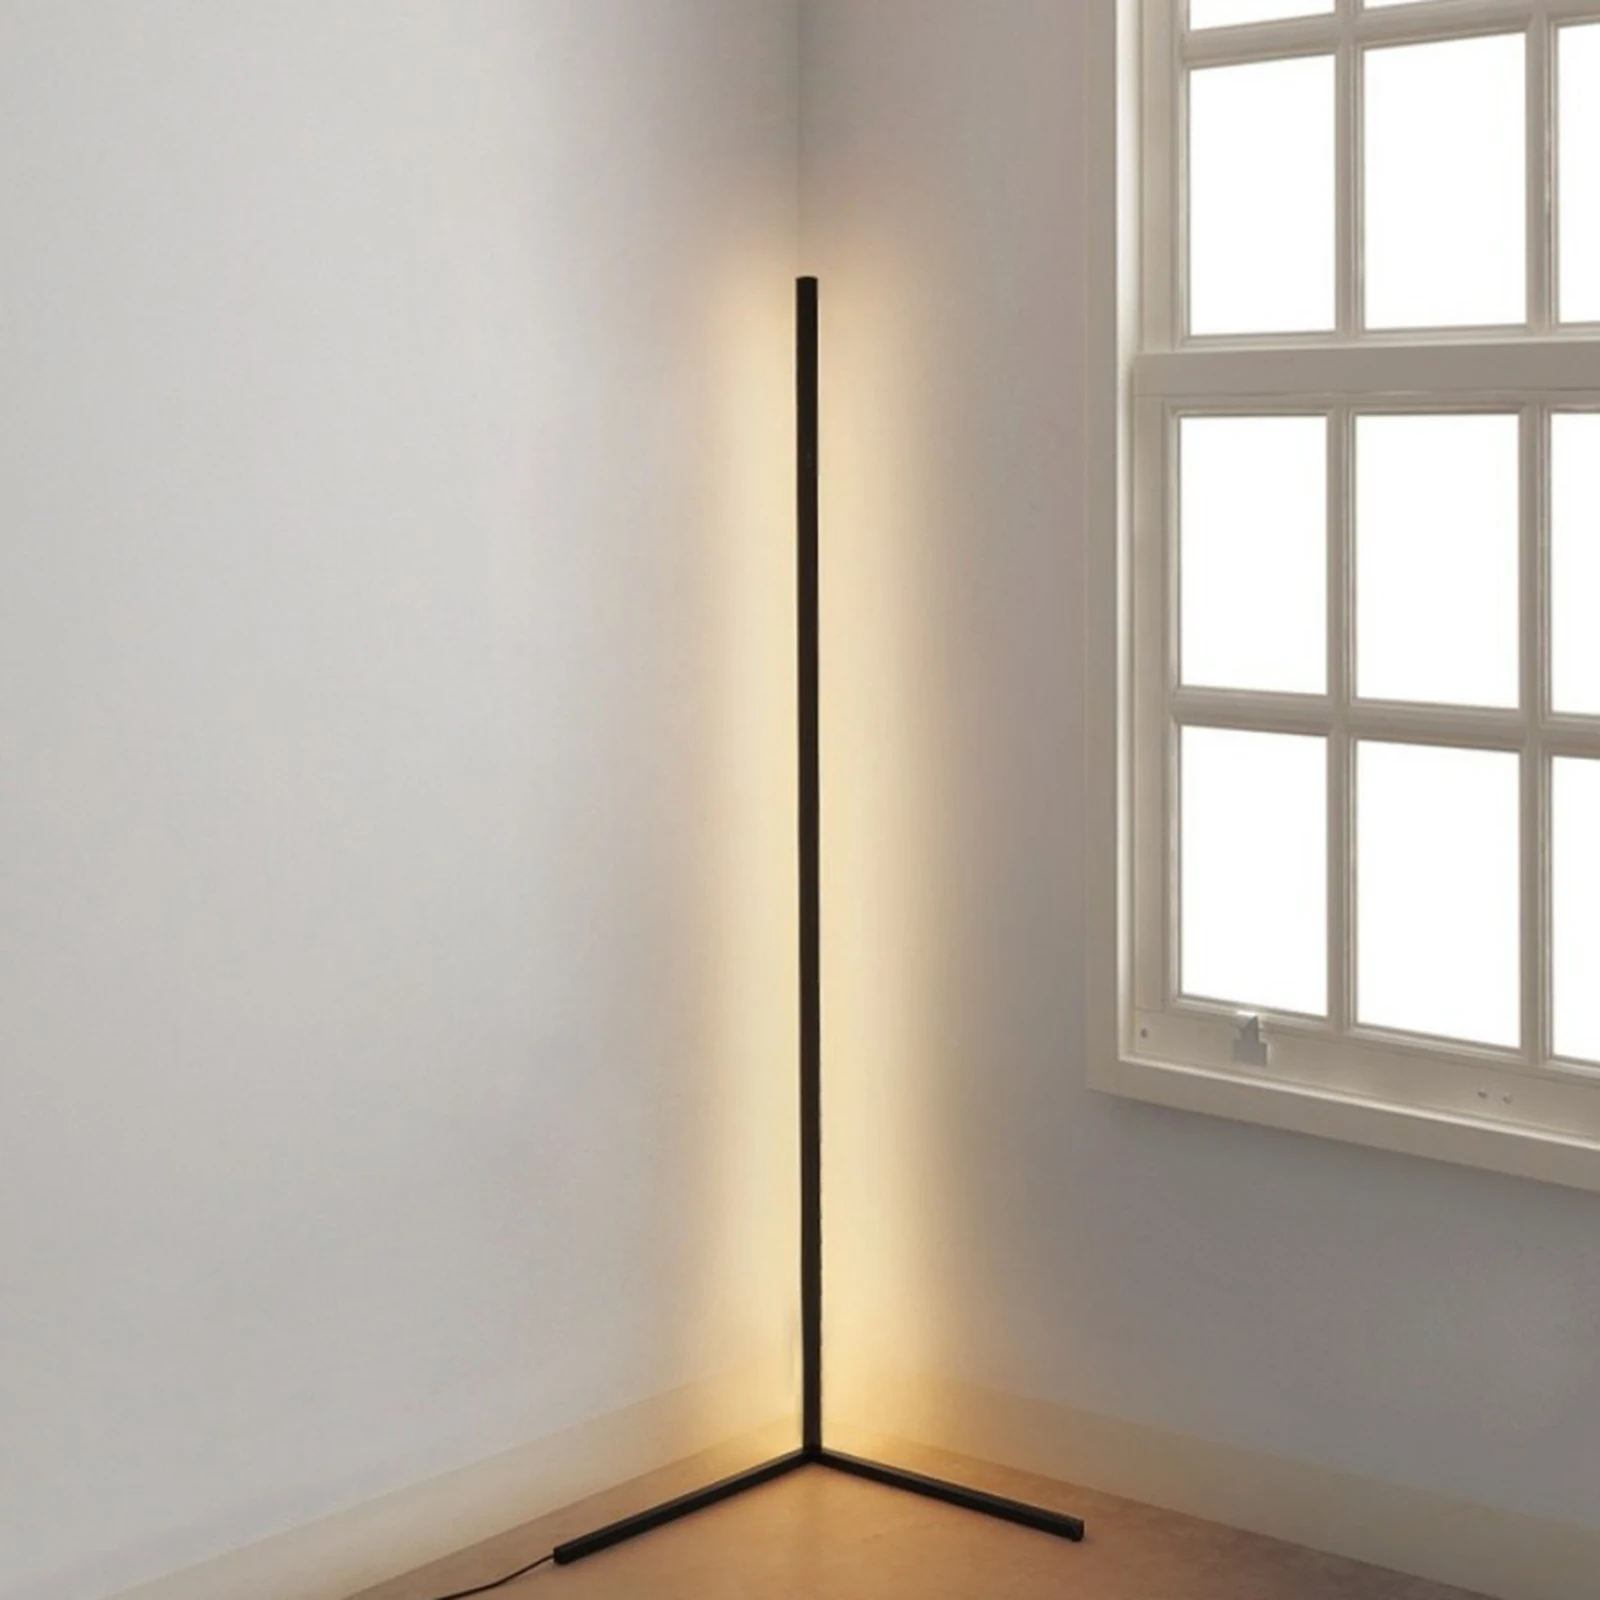 Metal LED wall corner and floor lamp color changing RGB lighting